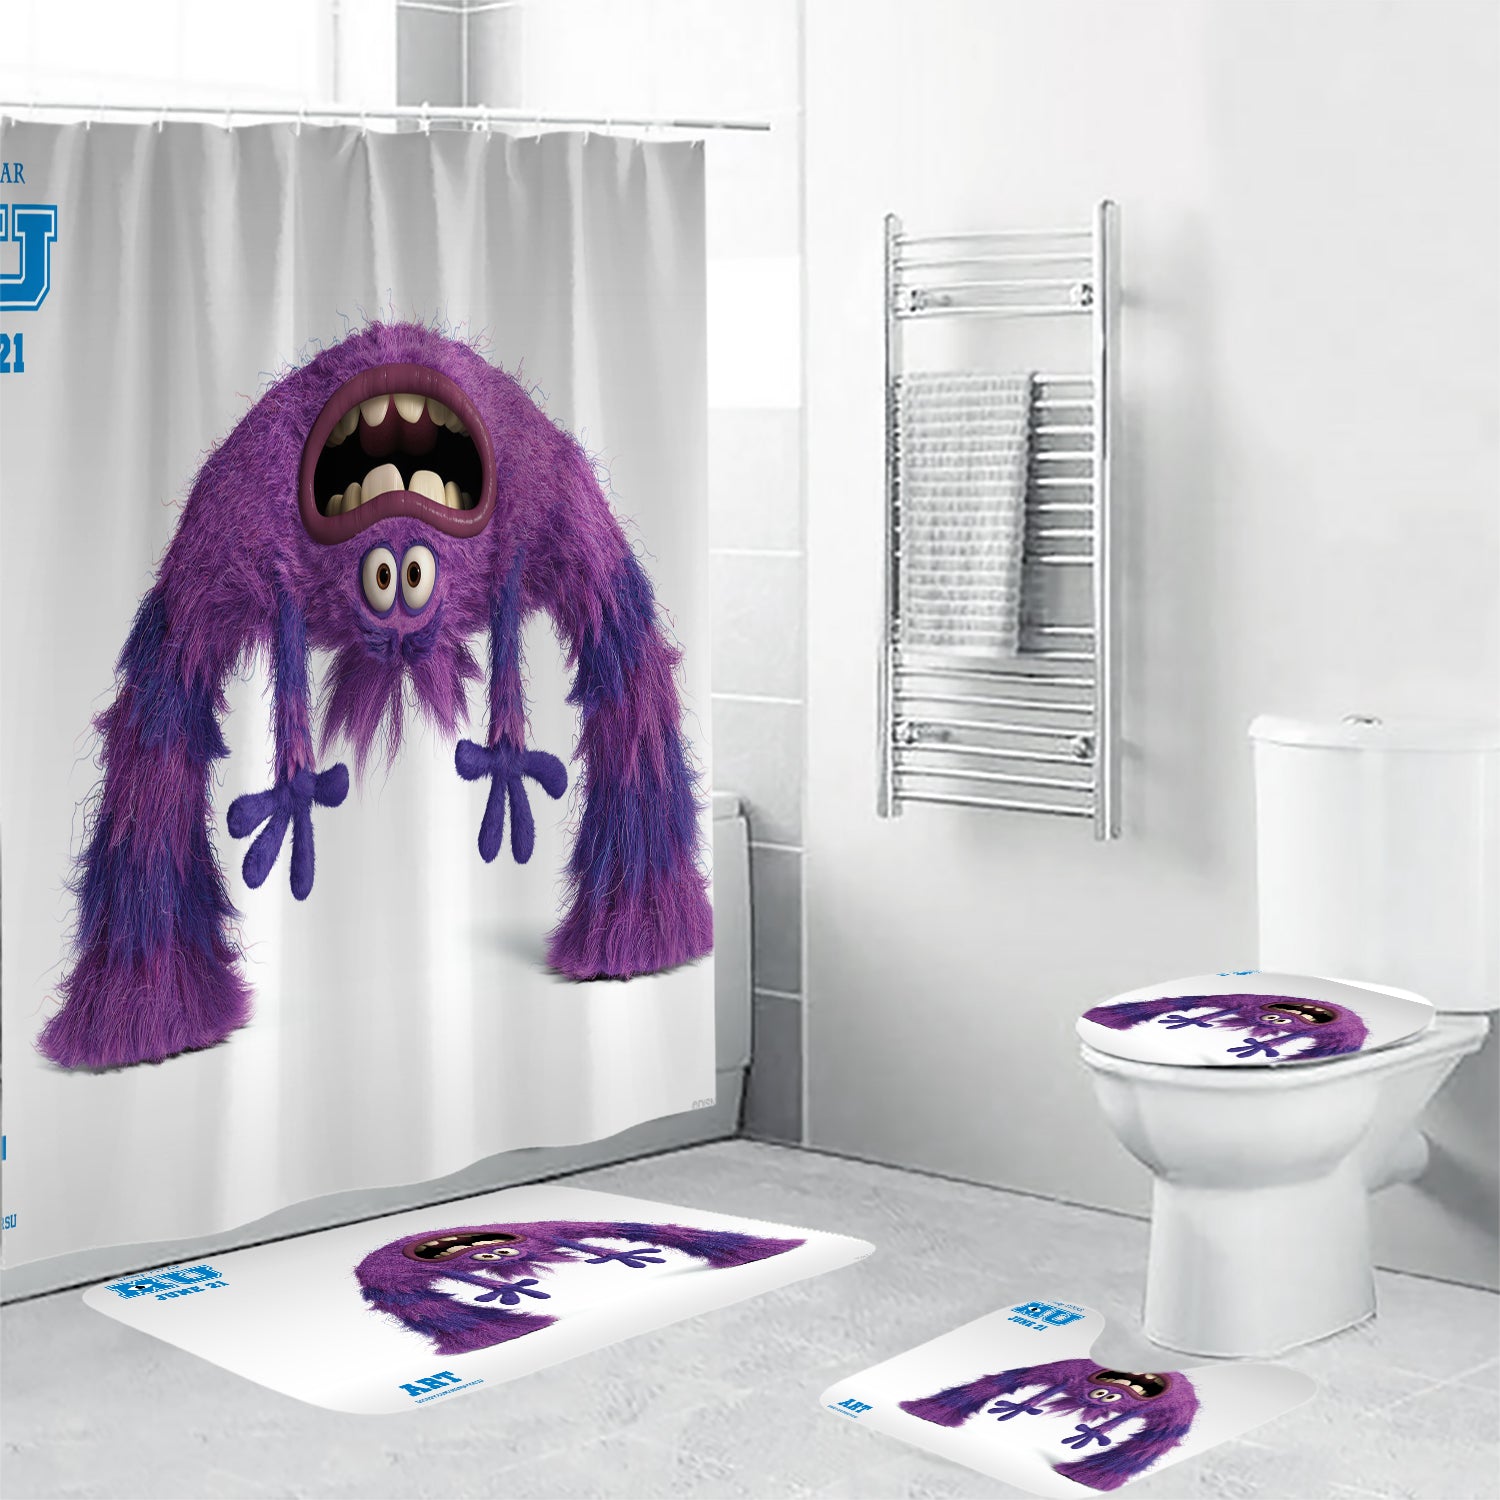 Characters Art Monsters Inc Monsters University Movie Disney Pixar Waterproof Shower Curtain Non-Slip Toilet Lid Cover Bath Mat - Bathroom Set